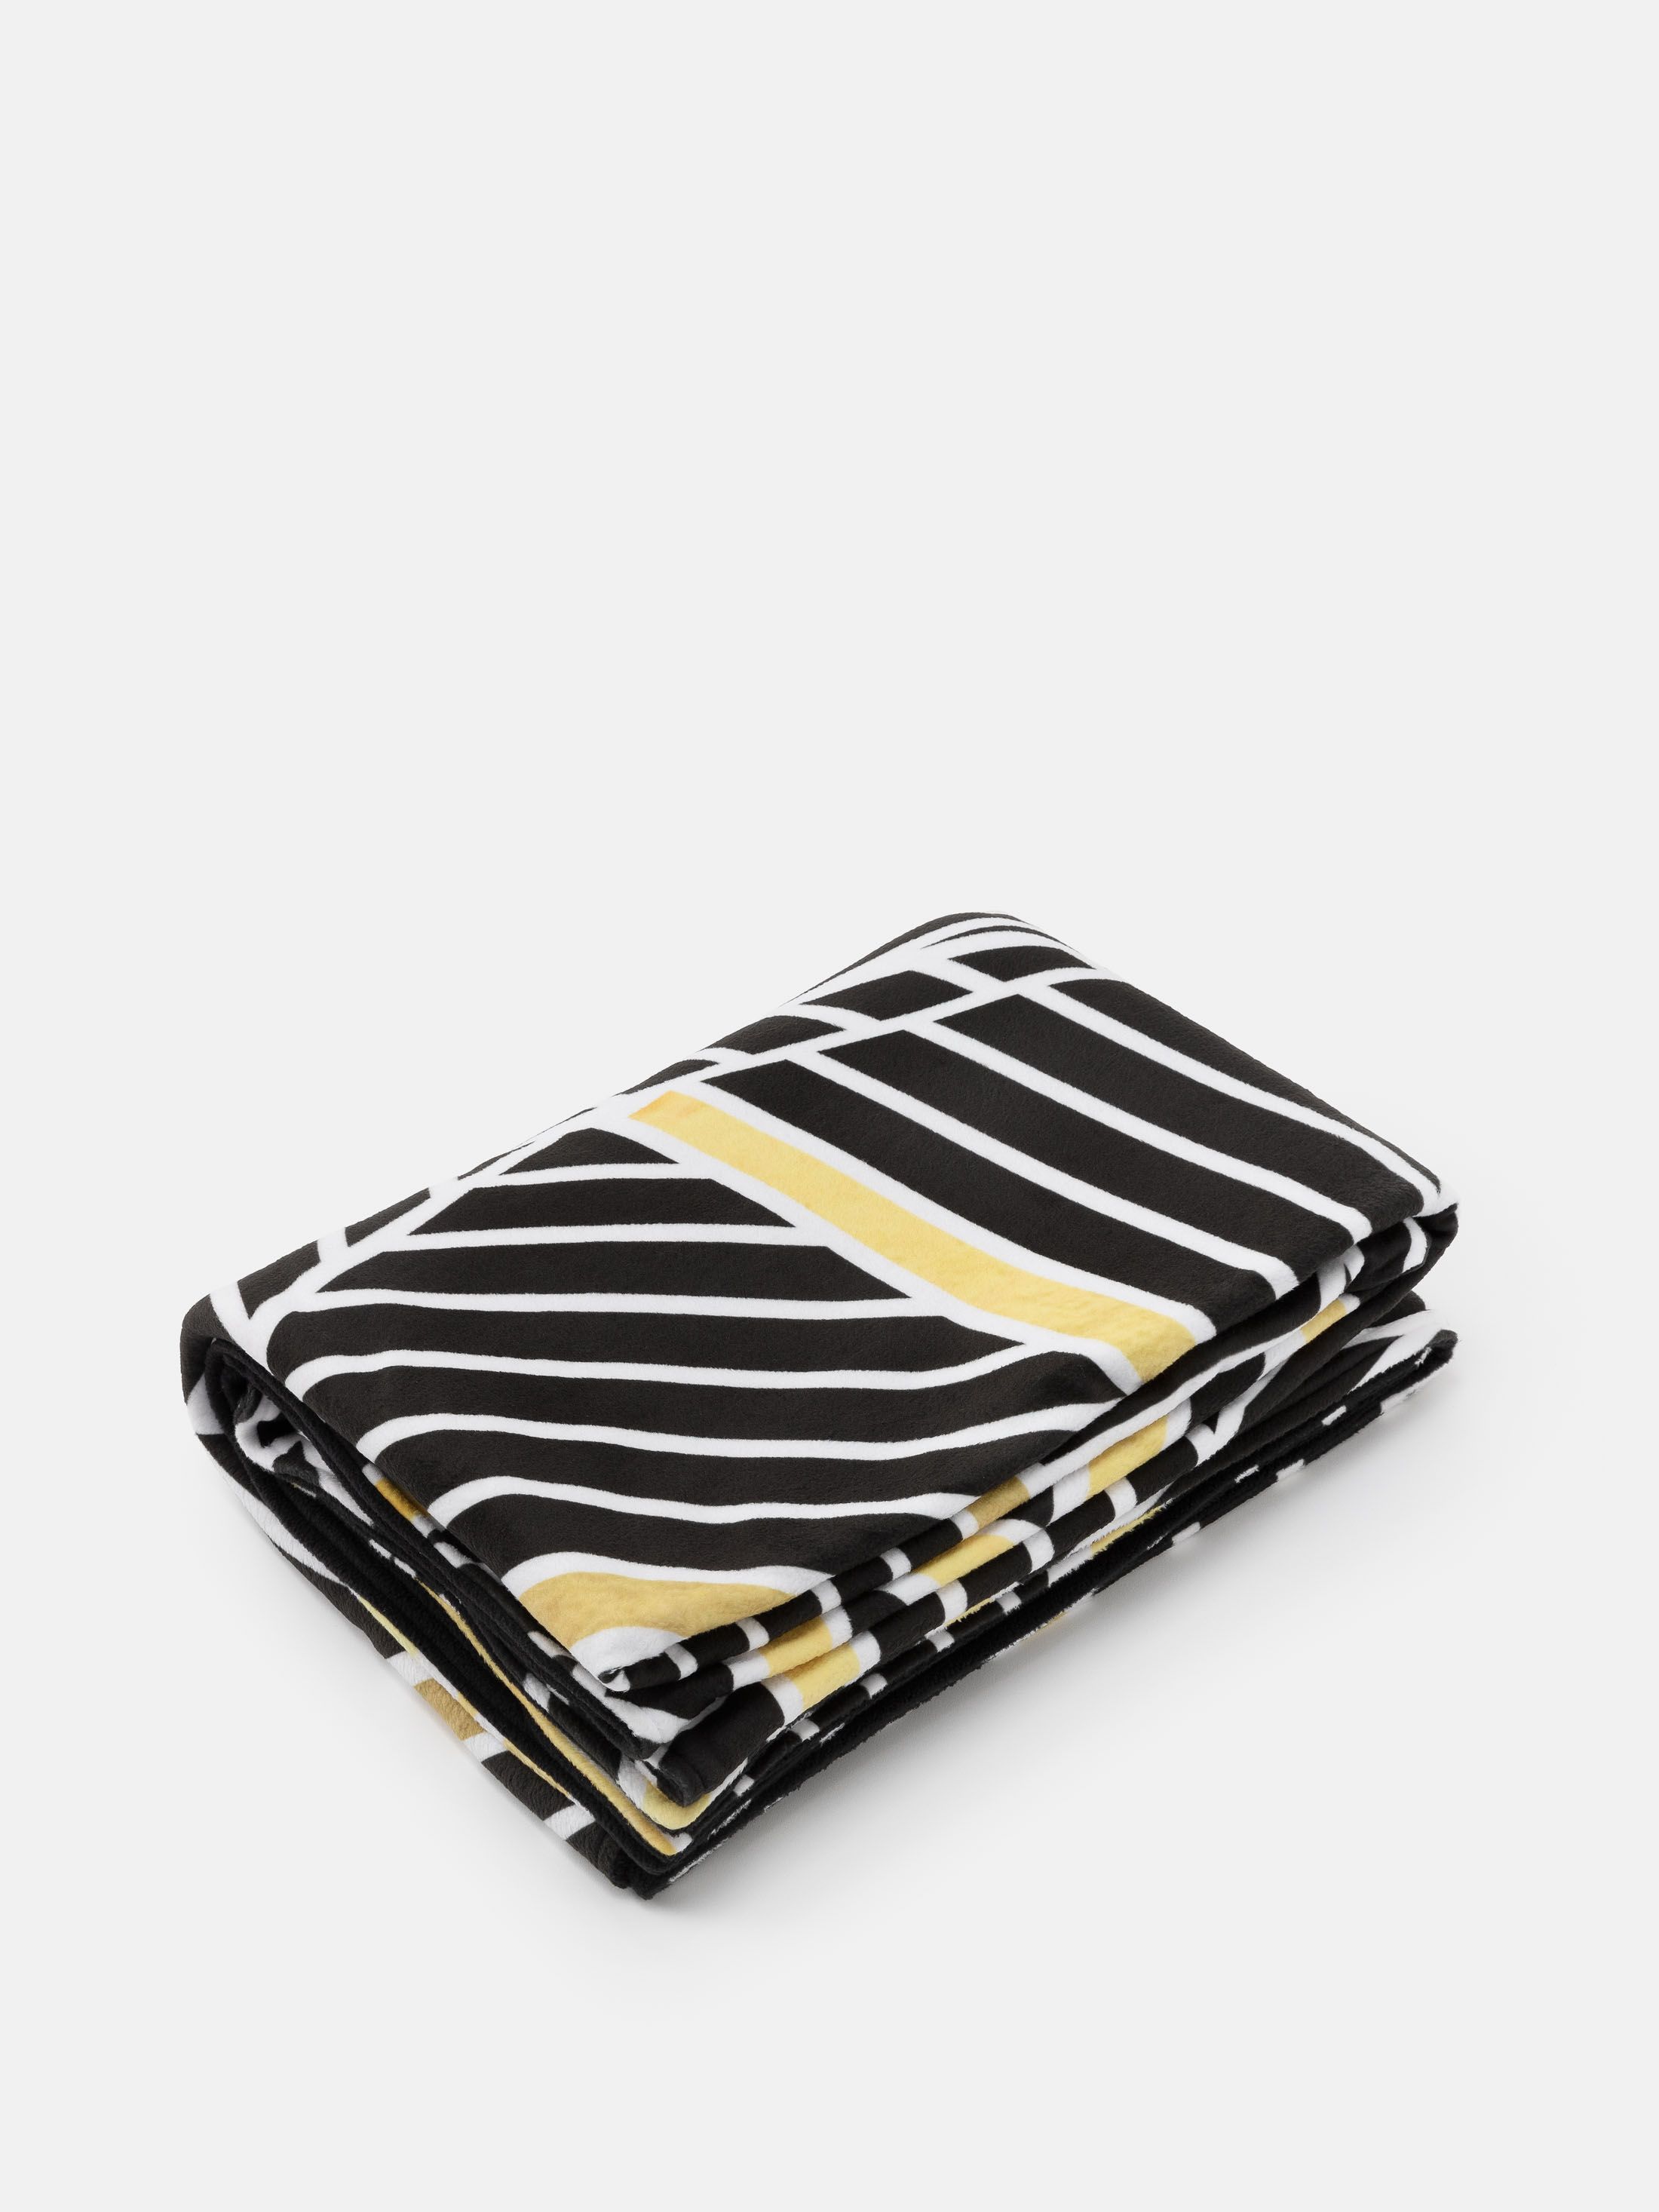 custom blankets folded on bed